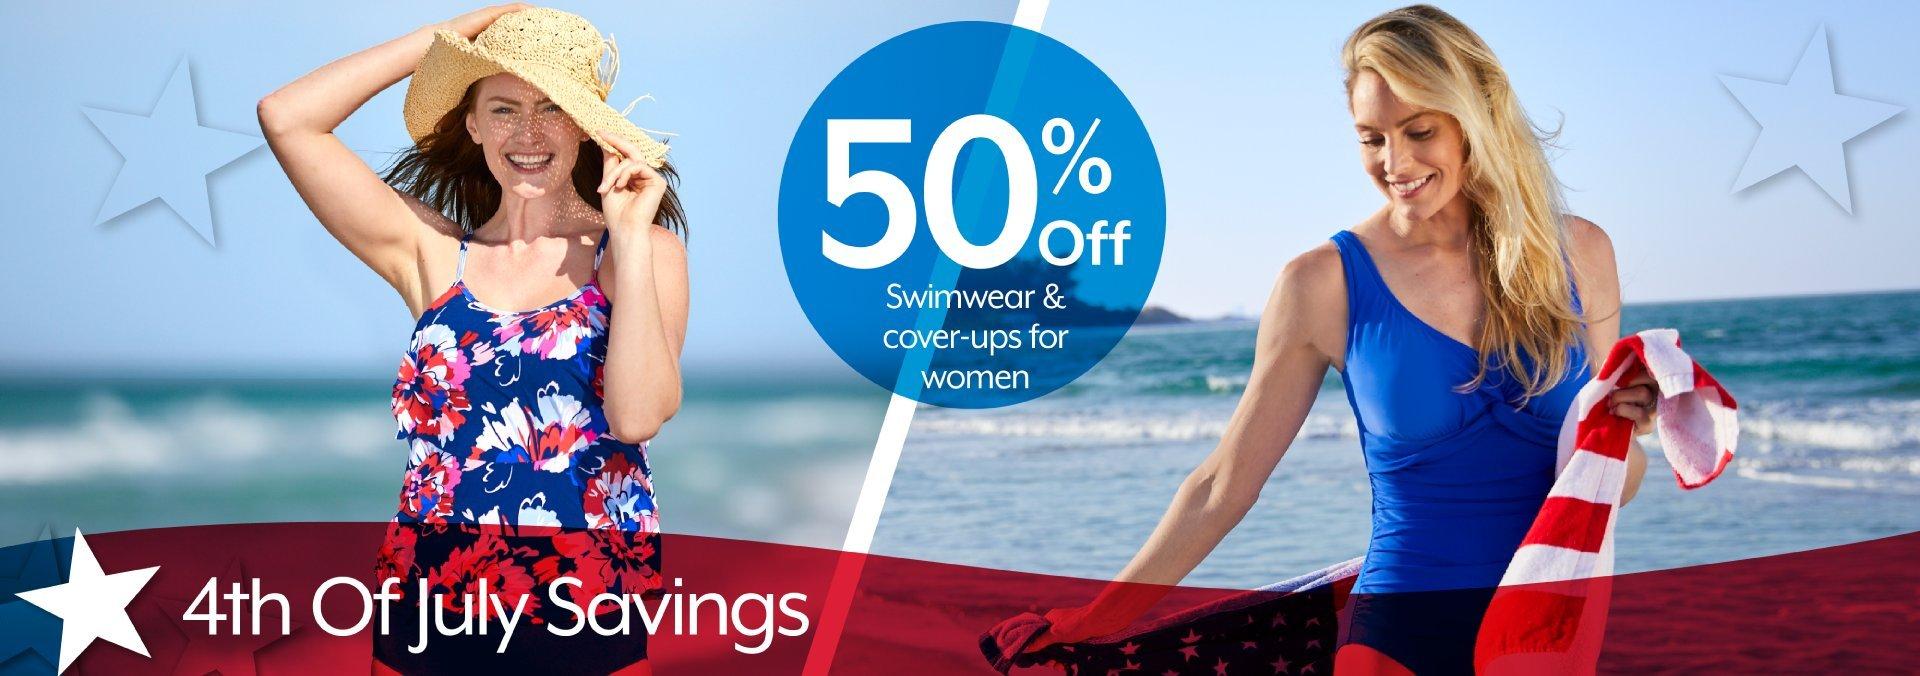 50% off Swimwear & Cover-ups for women